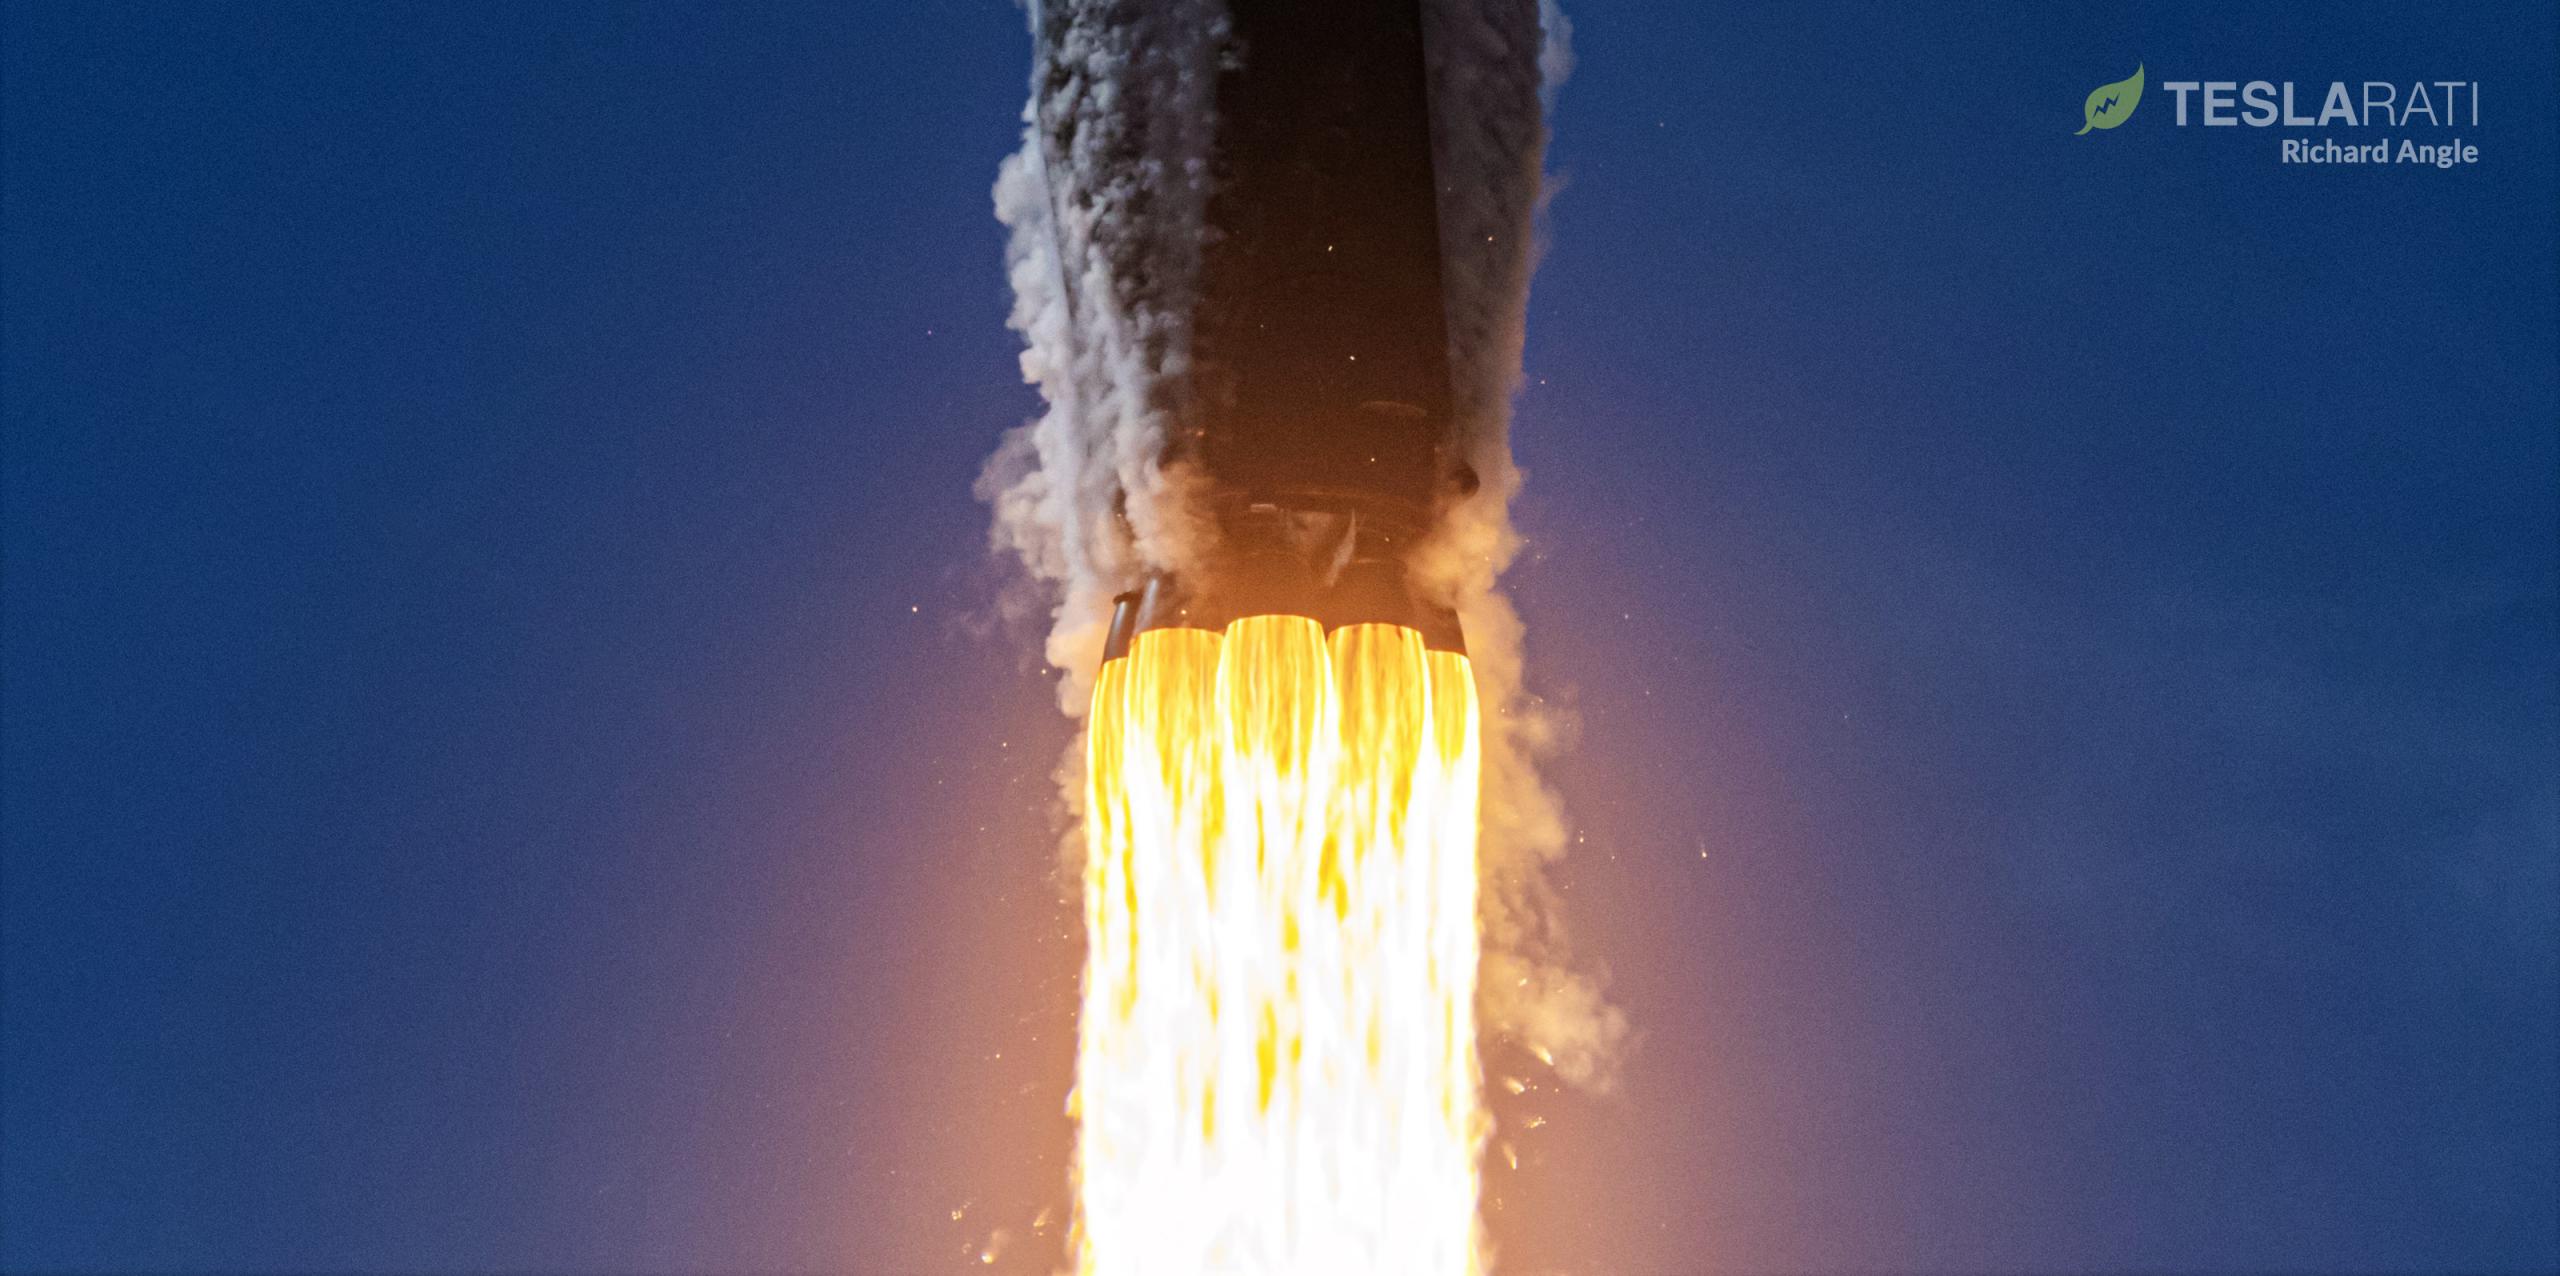 SXM-7 Falcon 9 B1051 LC-40 121320 (Richard Angle) launch 5 crop 2 (c)